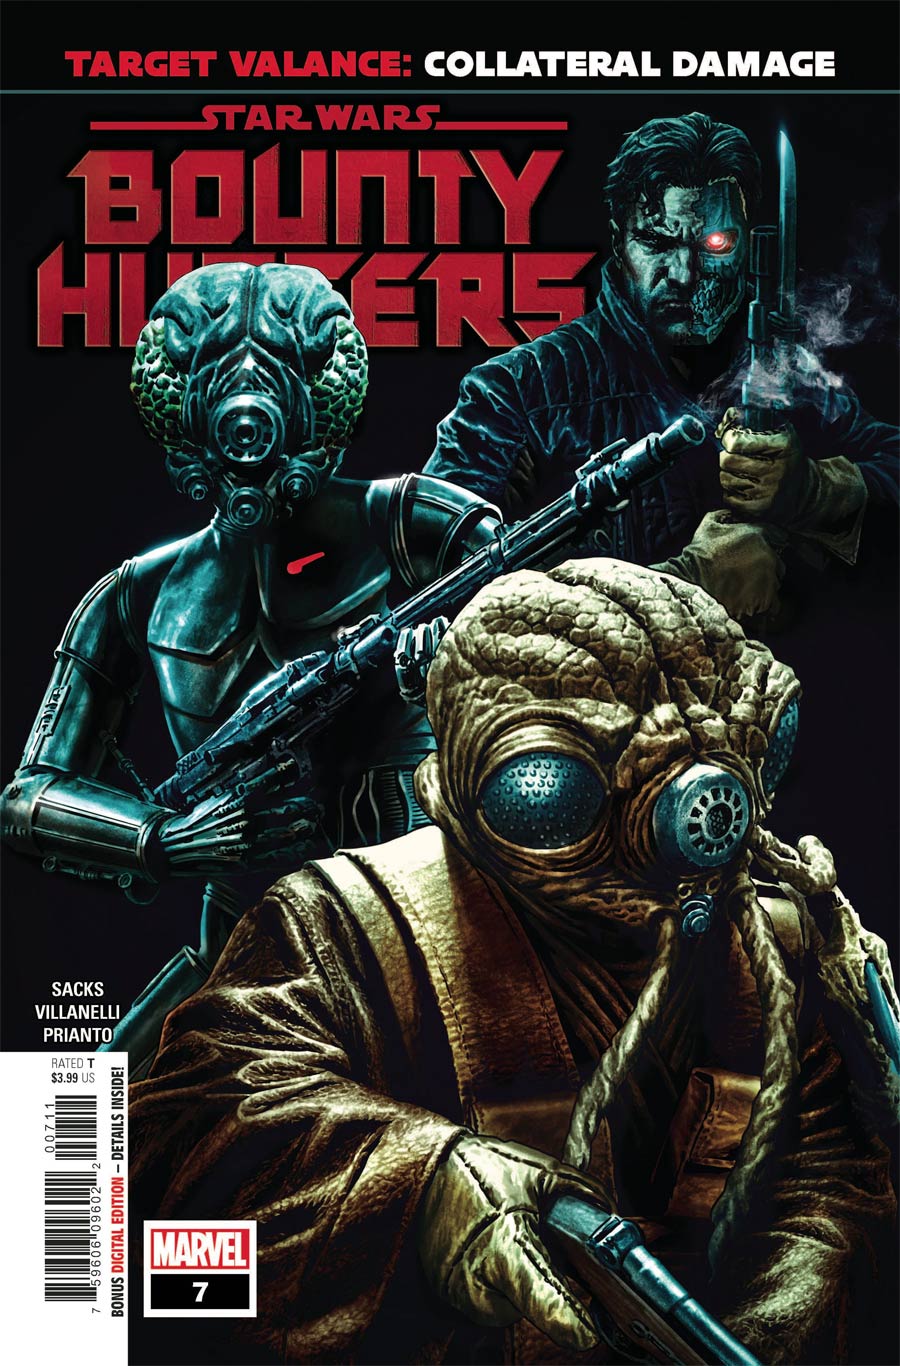 Star Wars Bounty Hunters #7 Cover A Regular Lee Bermejo Cover